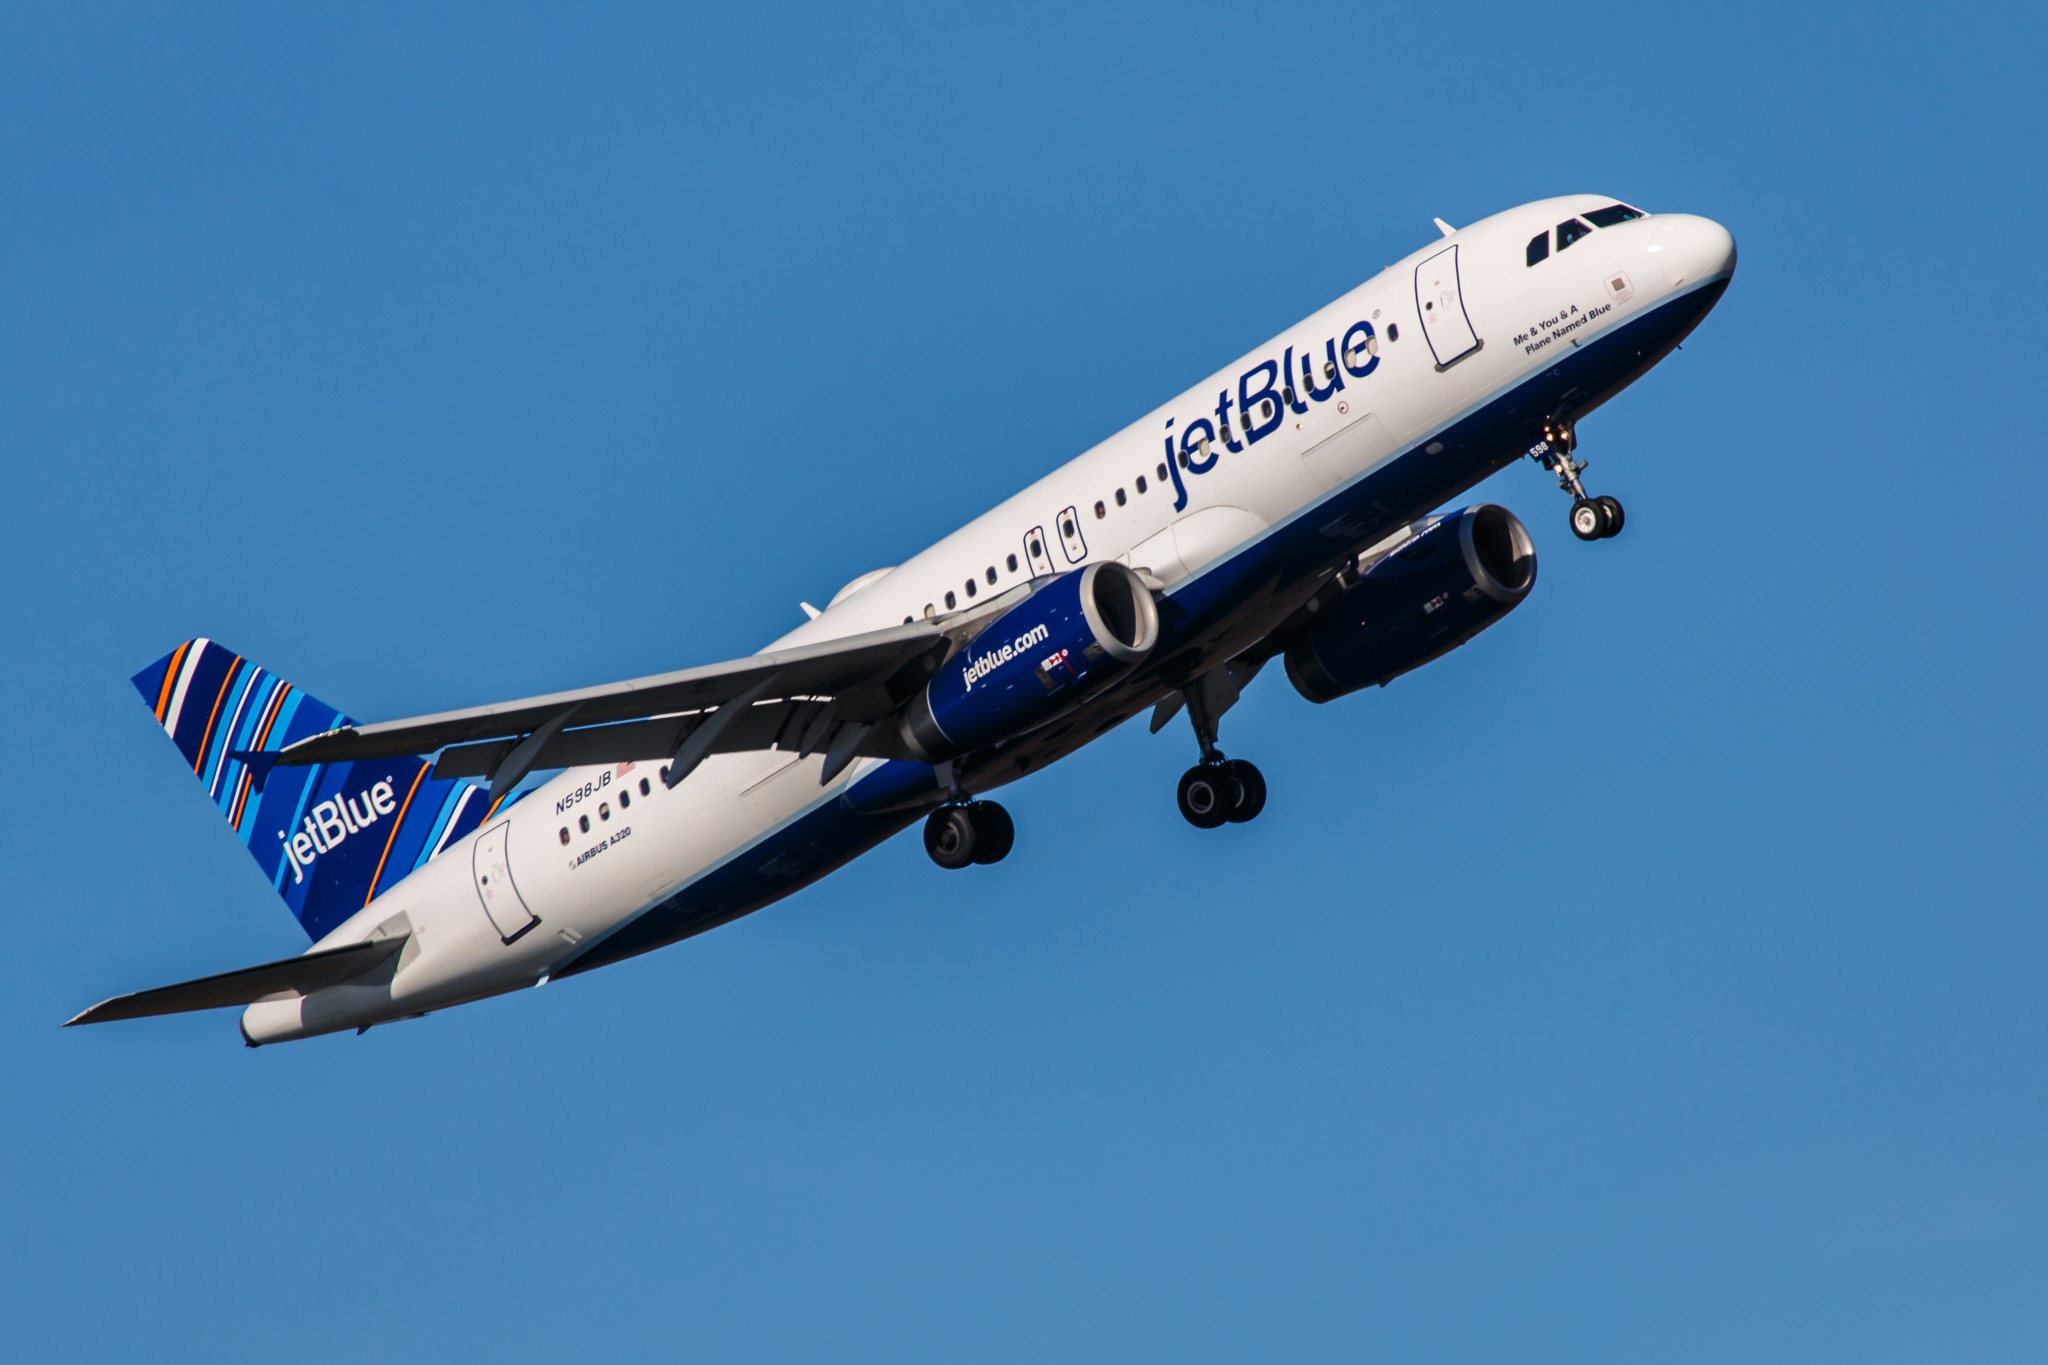 JetBlue adds Paris as its second transatlantic destination